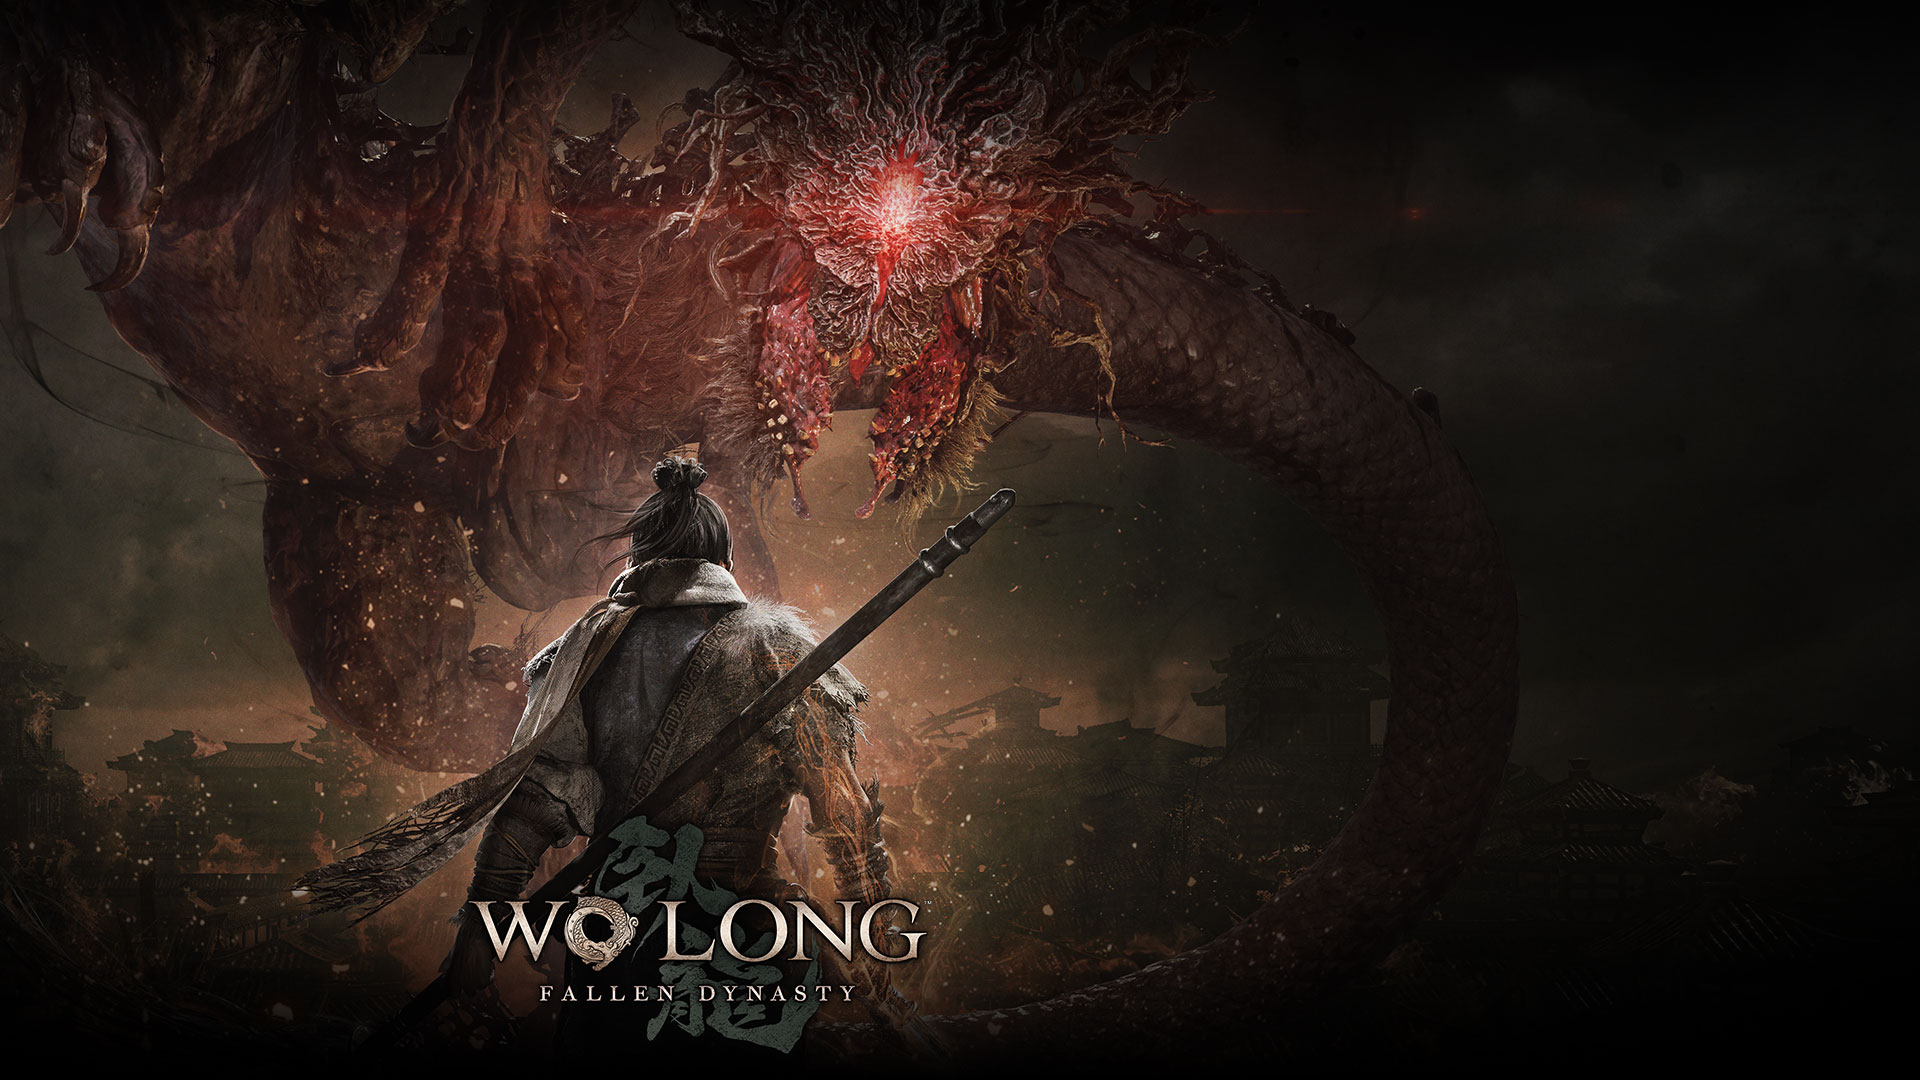 Wo Long: Fallen Dynasty, a lone swordsman squares off against a demonic dragon.